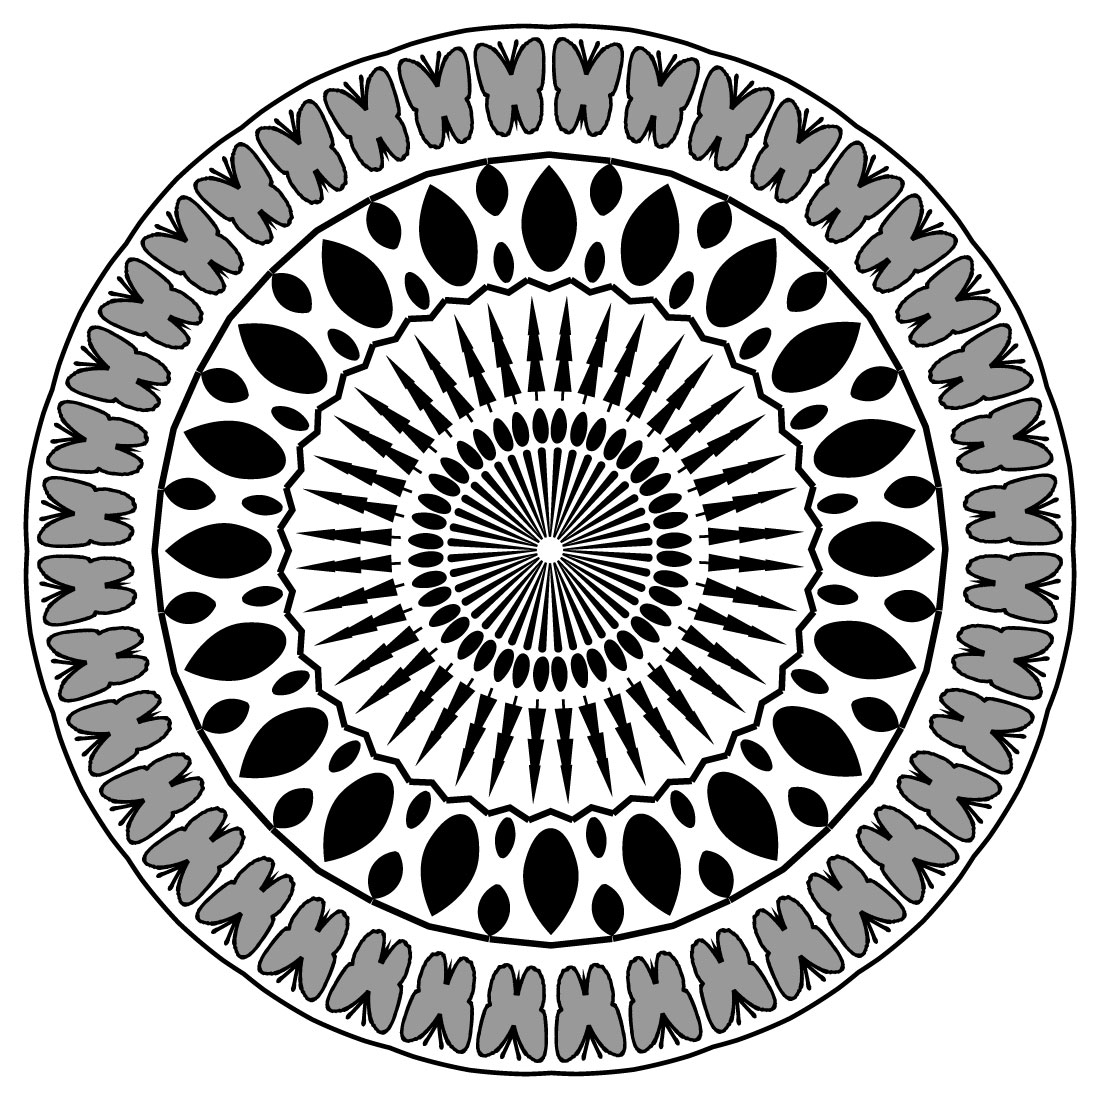 Mandala Art cock in blak and white circles preview image.